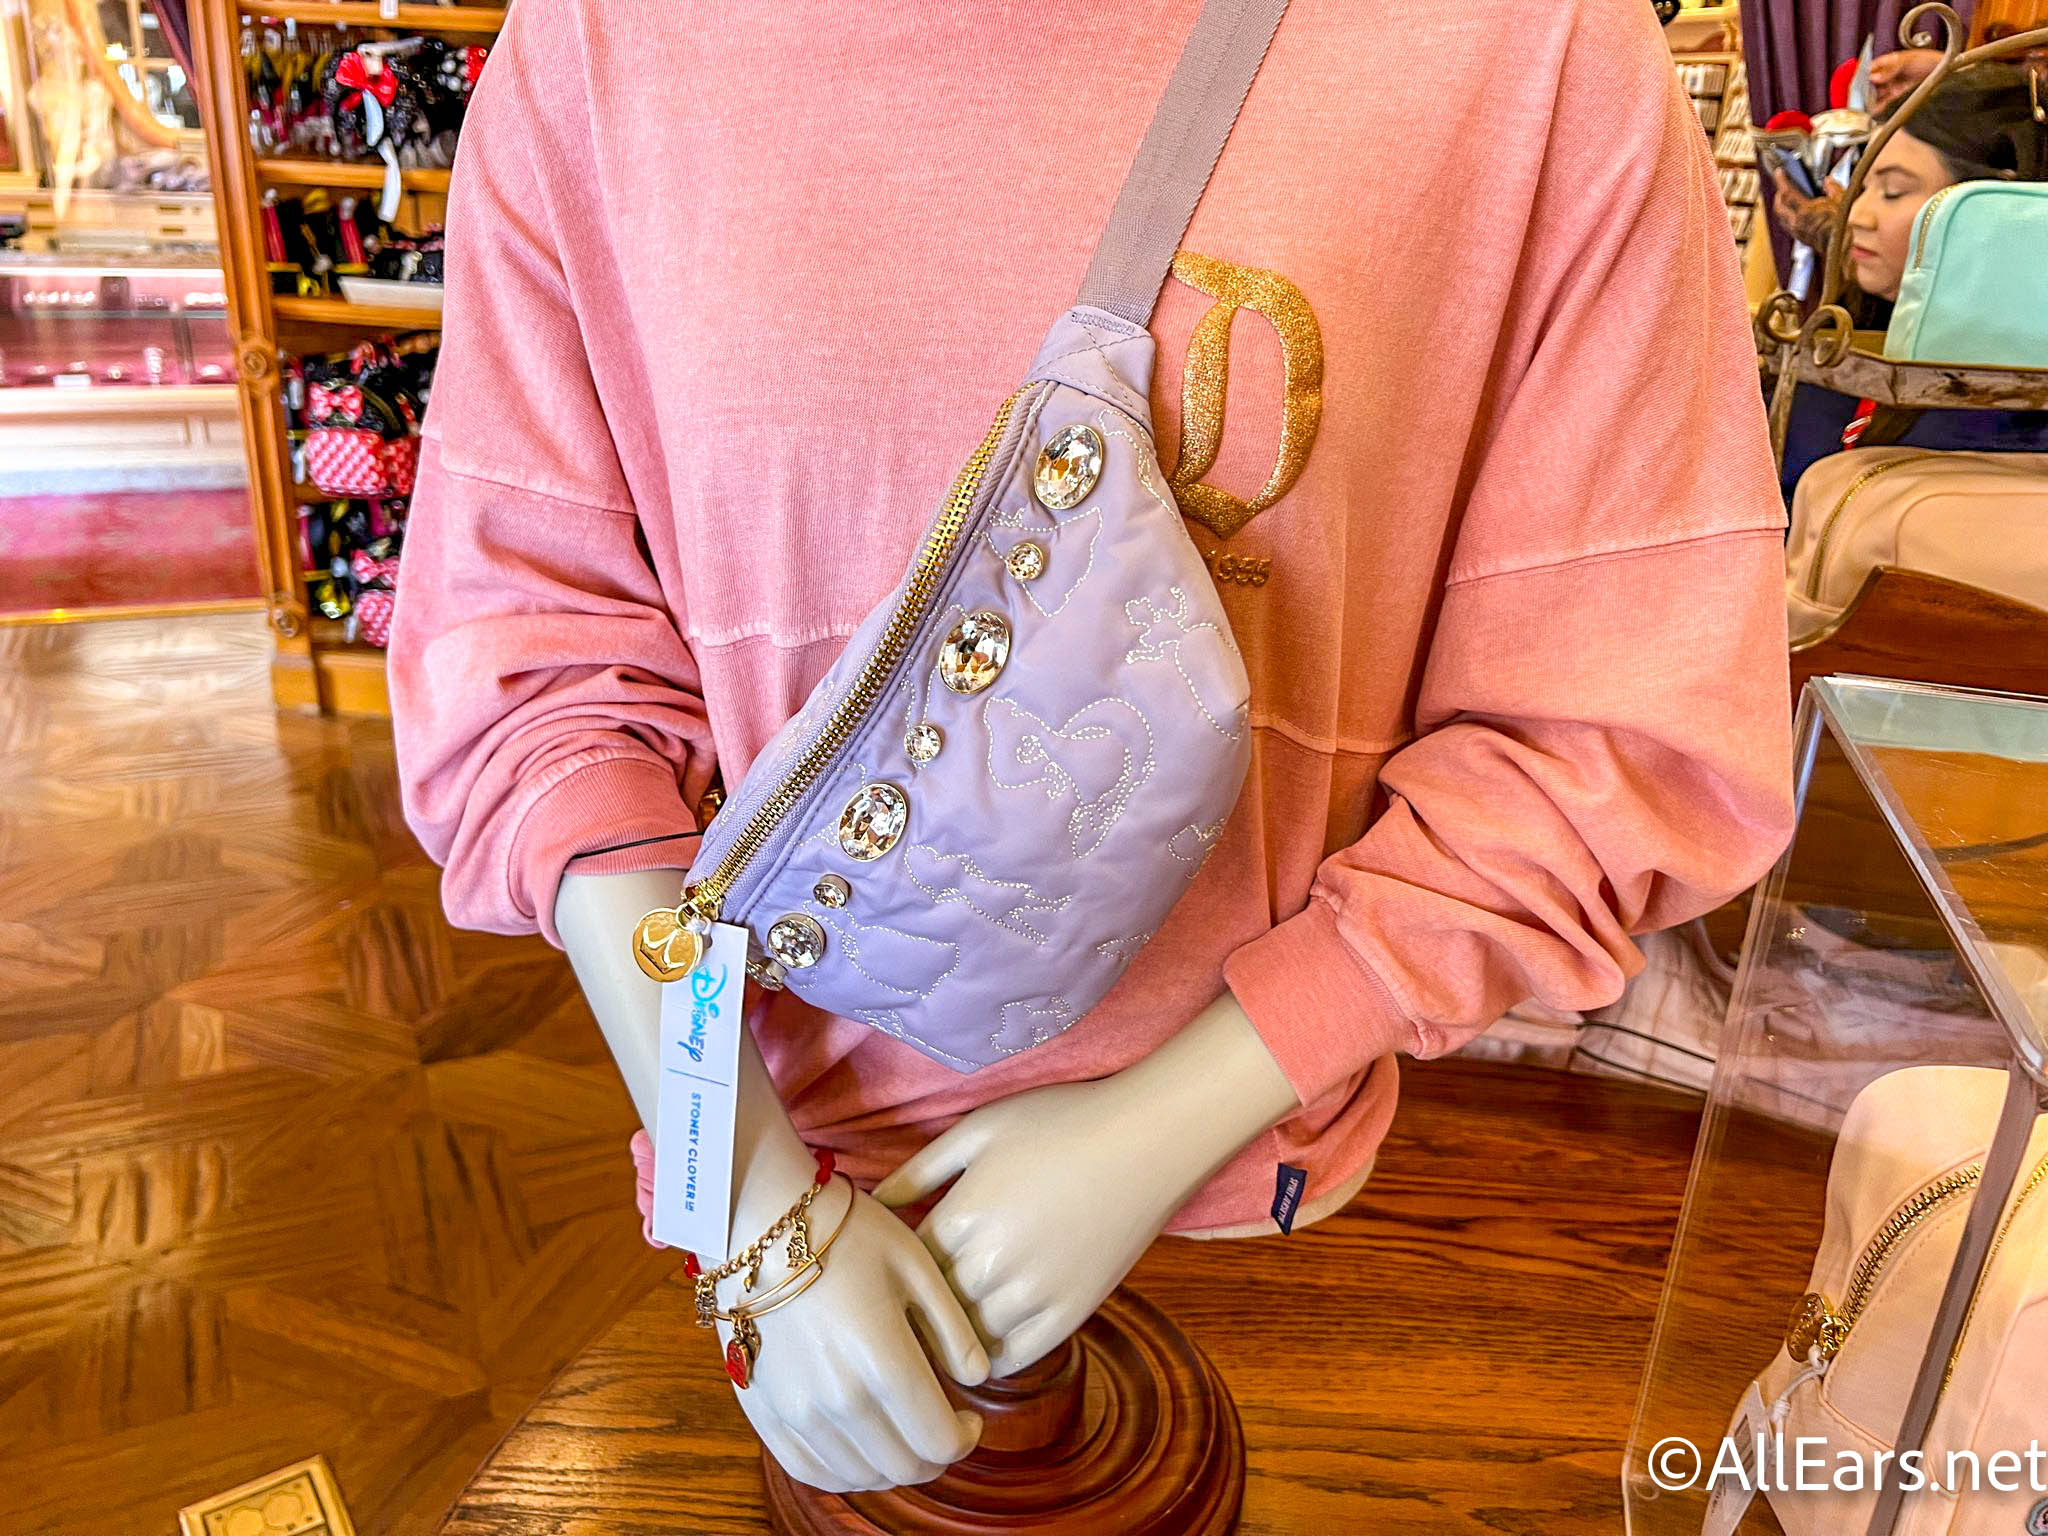 Surprise! A New Stoney Clover Lane Disney Princess Collection Dropped